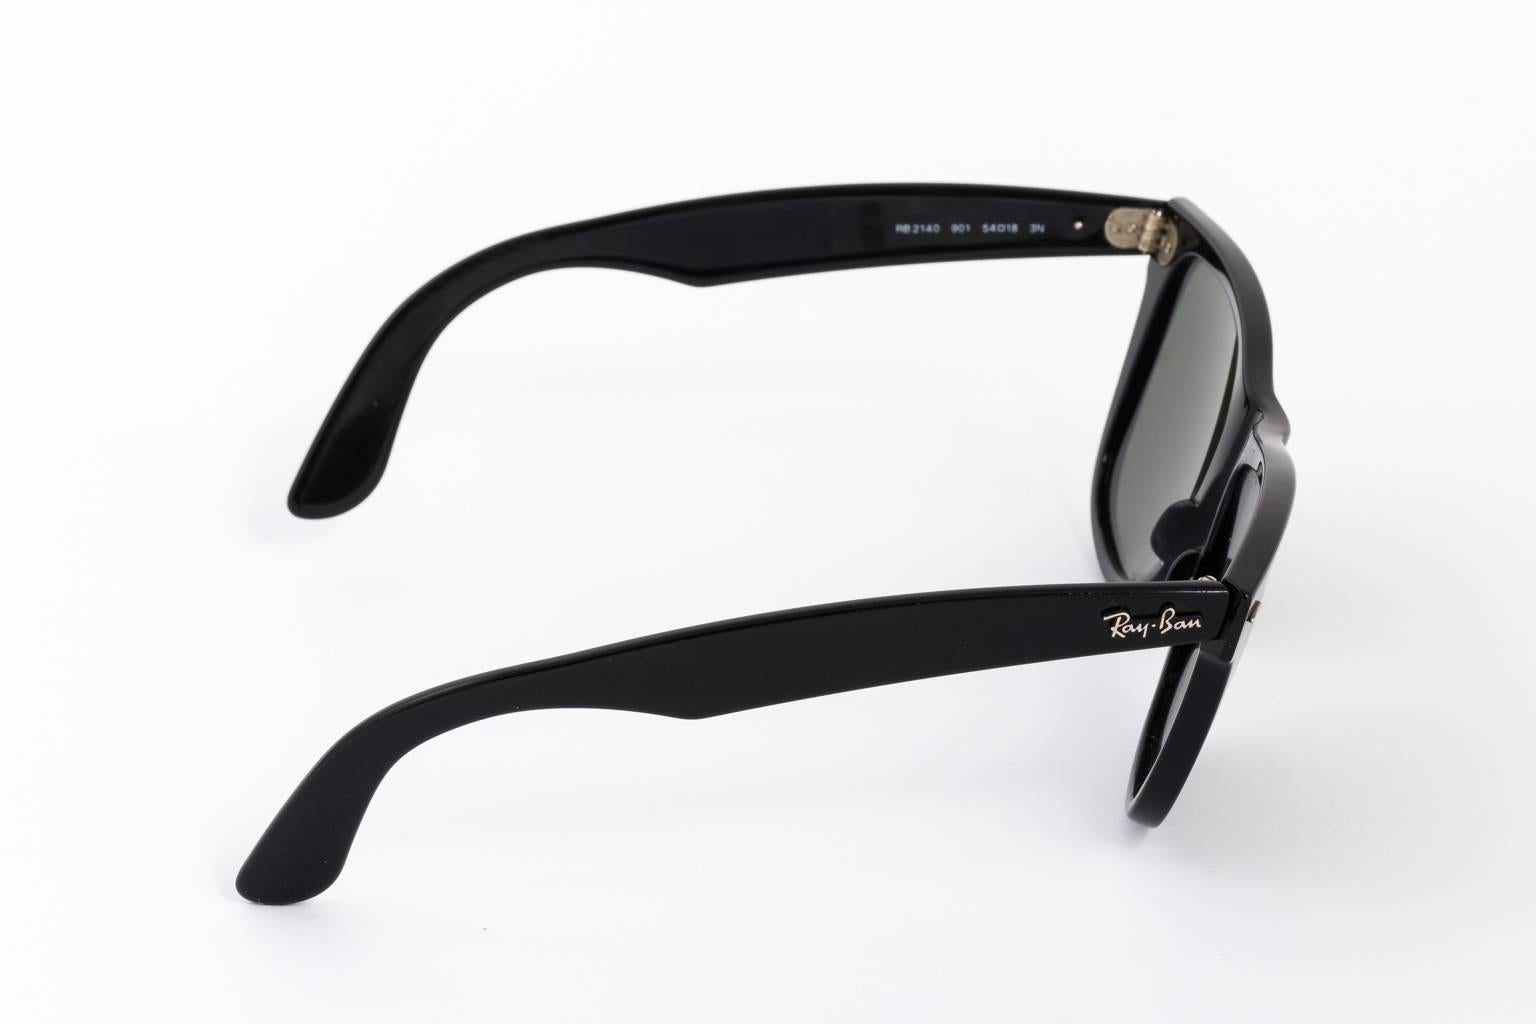  Black Ray-Ban sunglasses 6